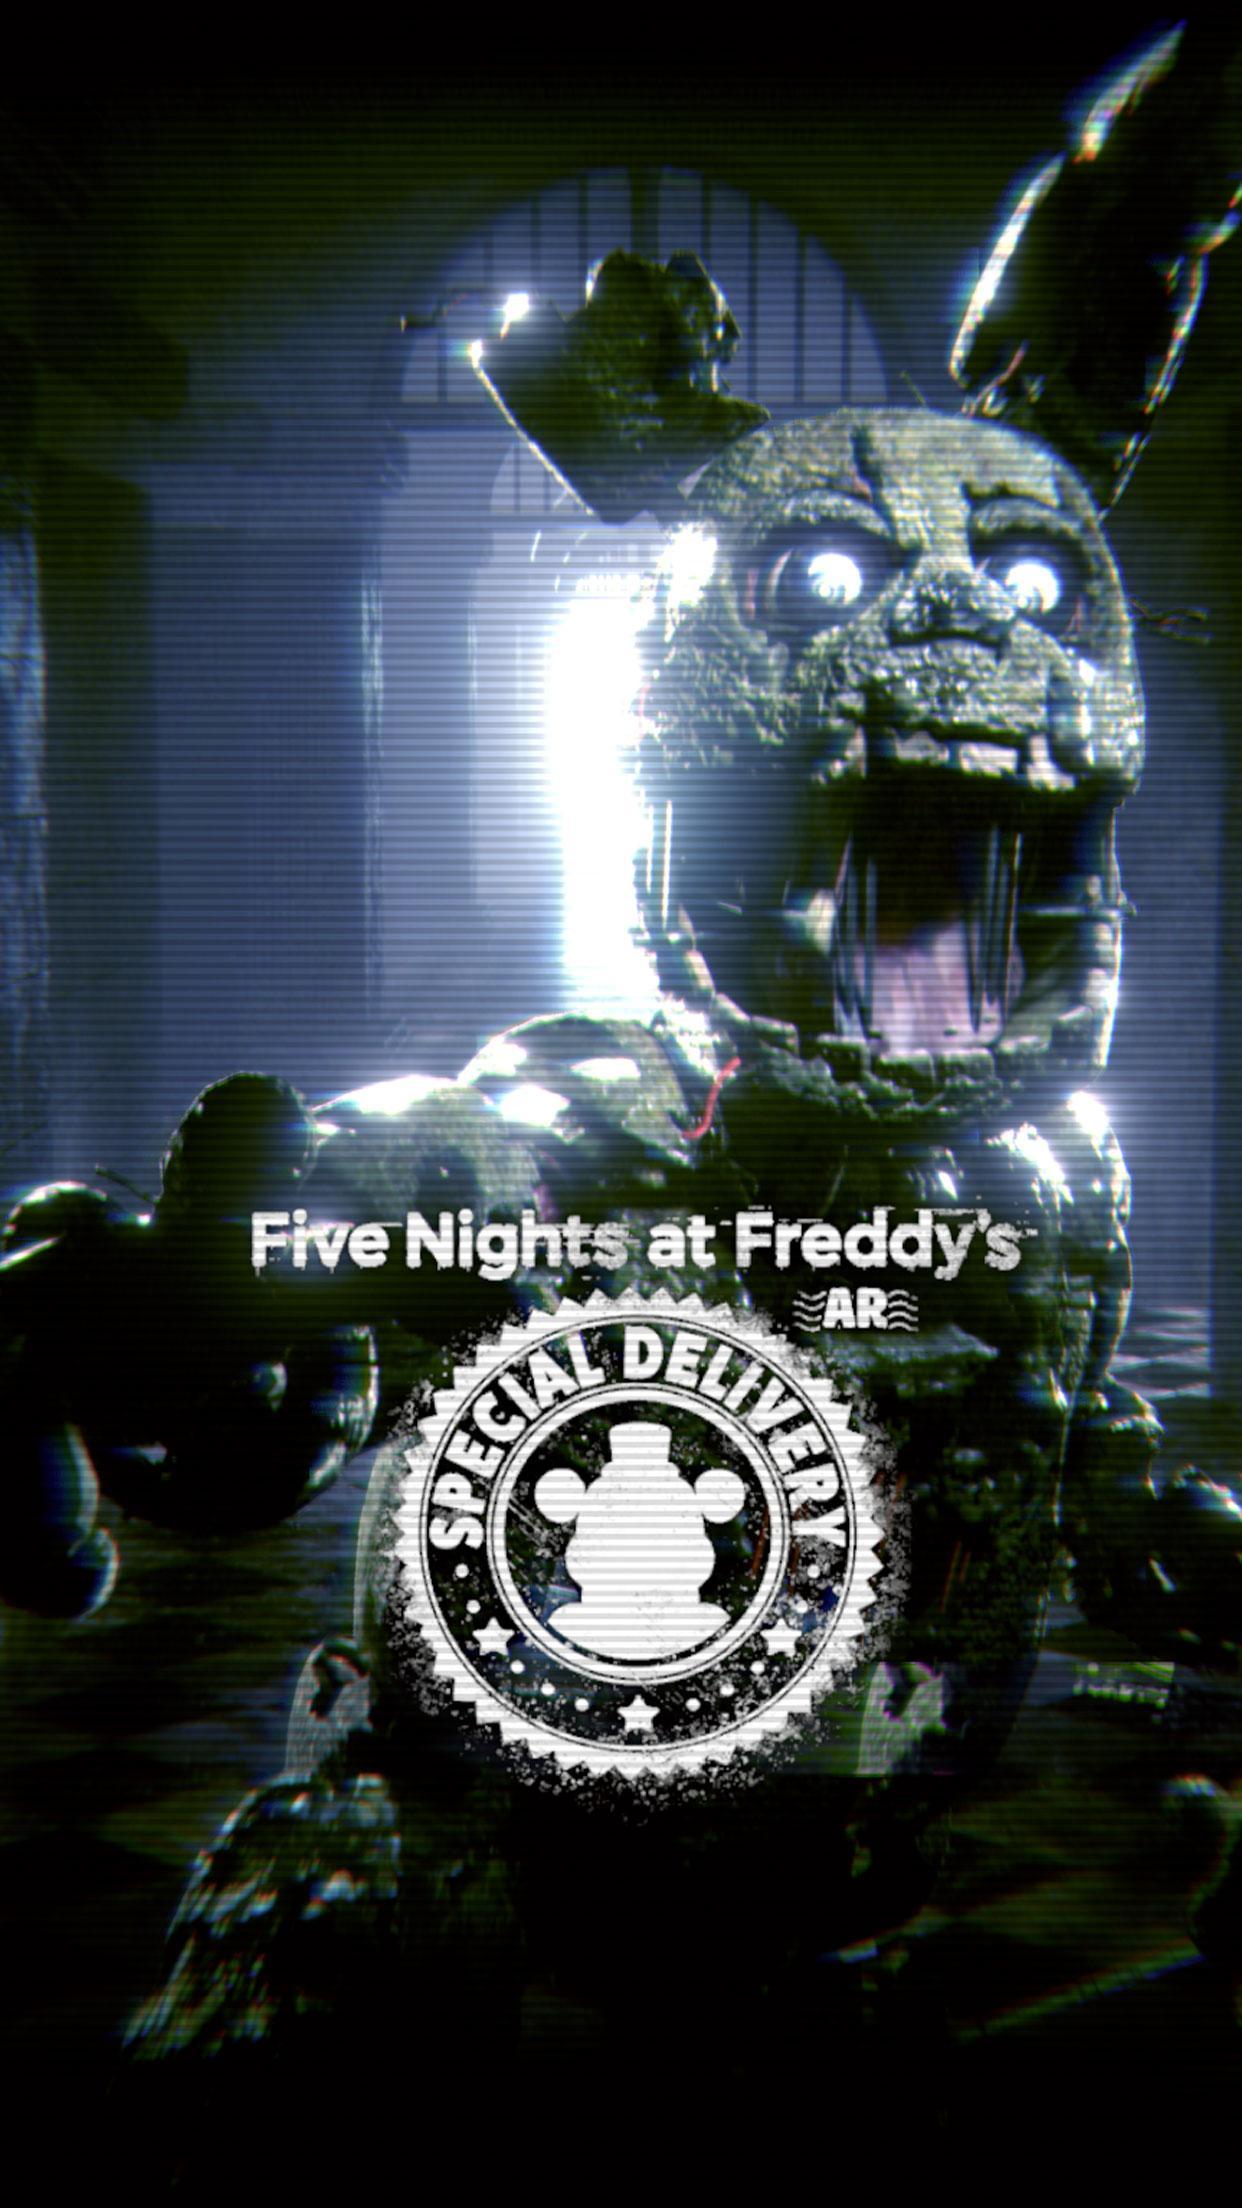 FNF Vs Freddy Android Otimizado Download 